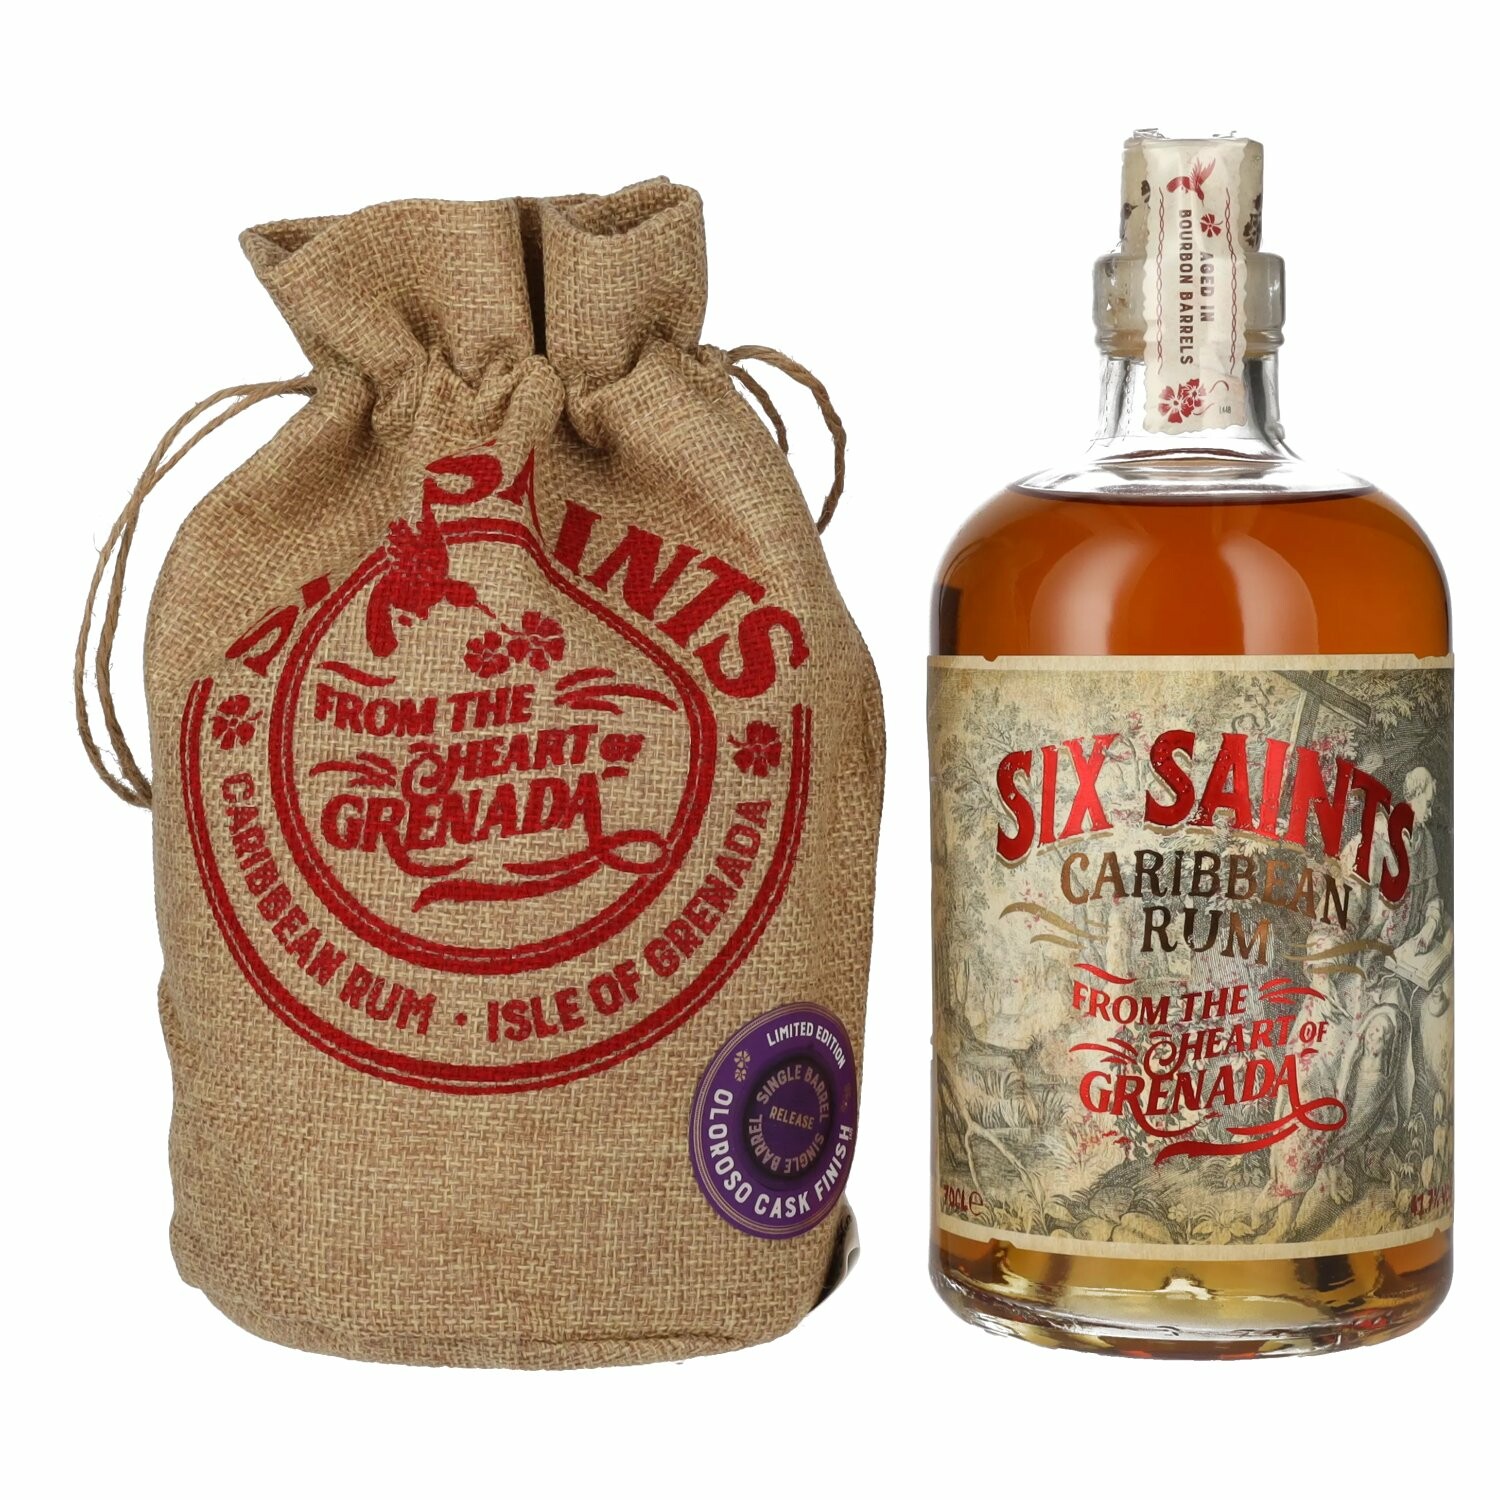 Six Saints Caribbean Rum OLOROSO Cask Finish Limited Edition 41,7% Vol. 0,7l im Leinensackerl